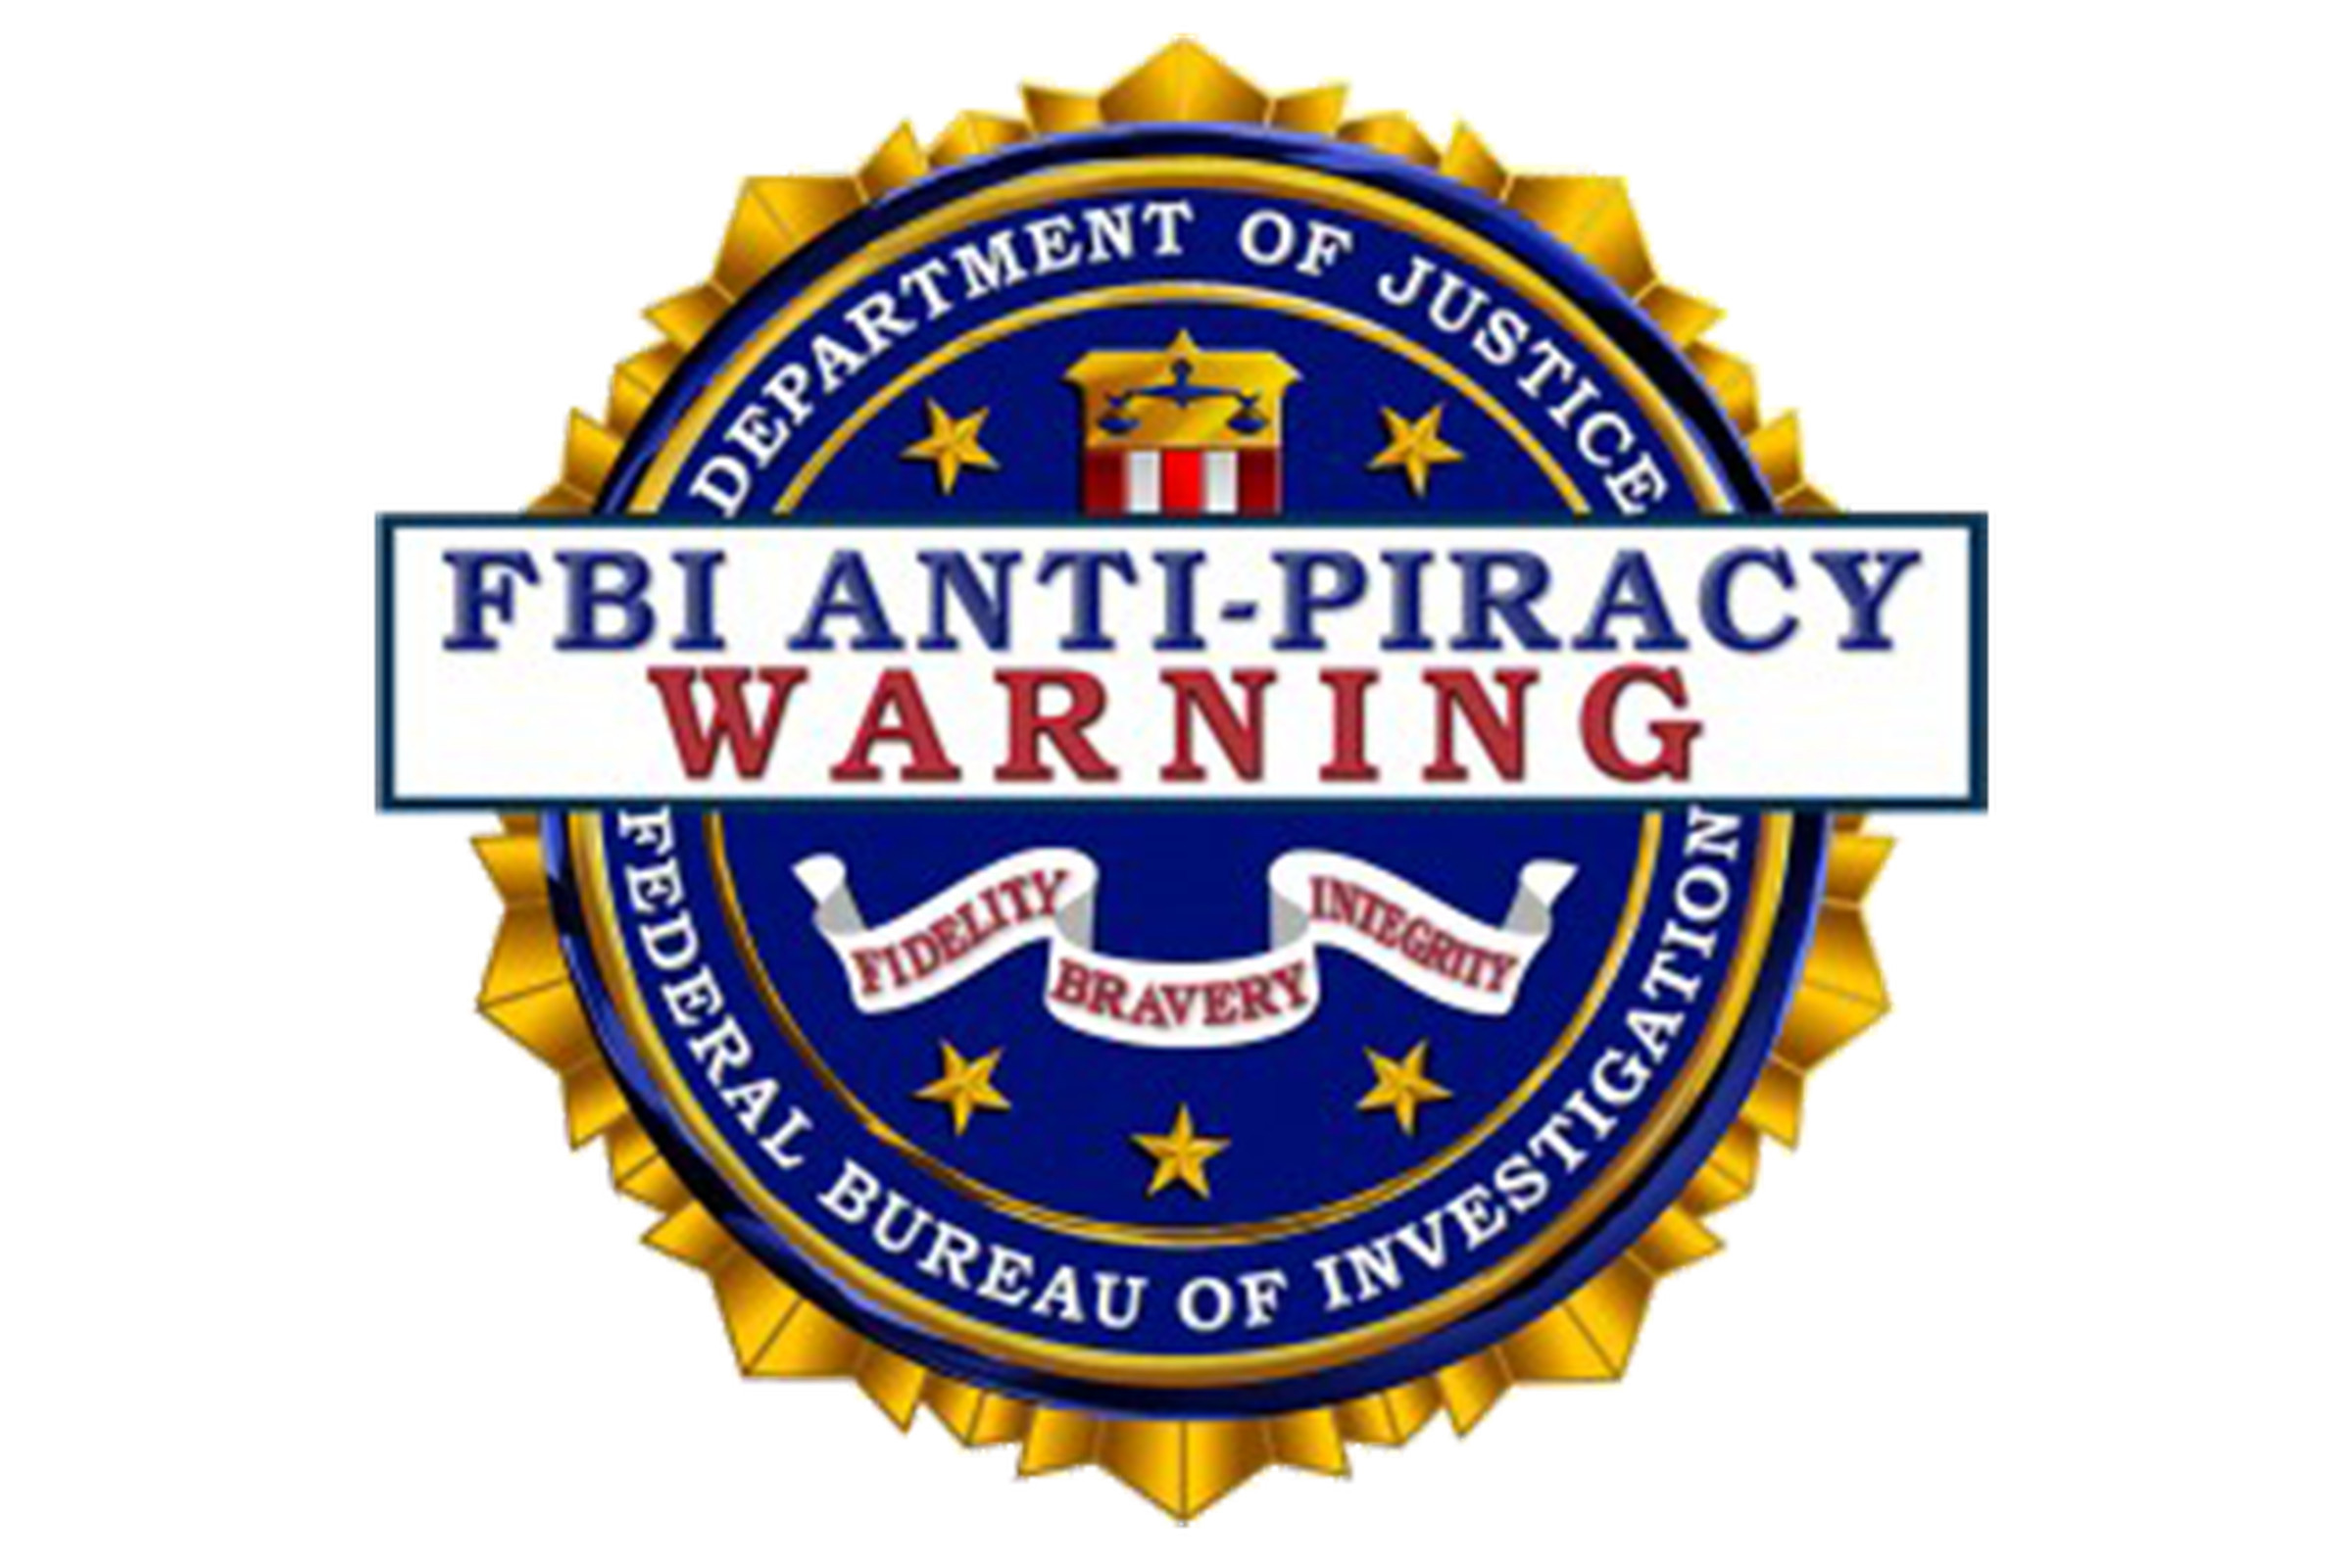 fbi anti-piracy seal (fbi)